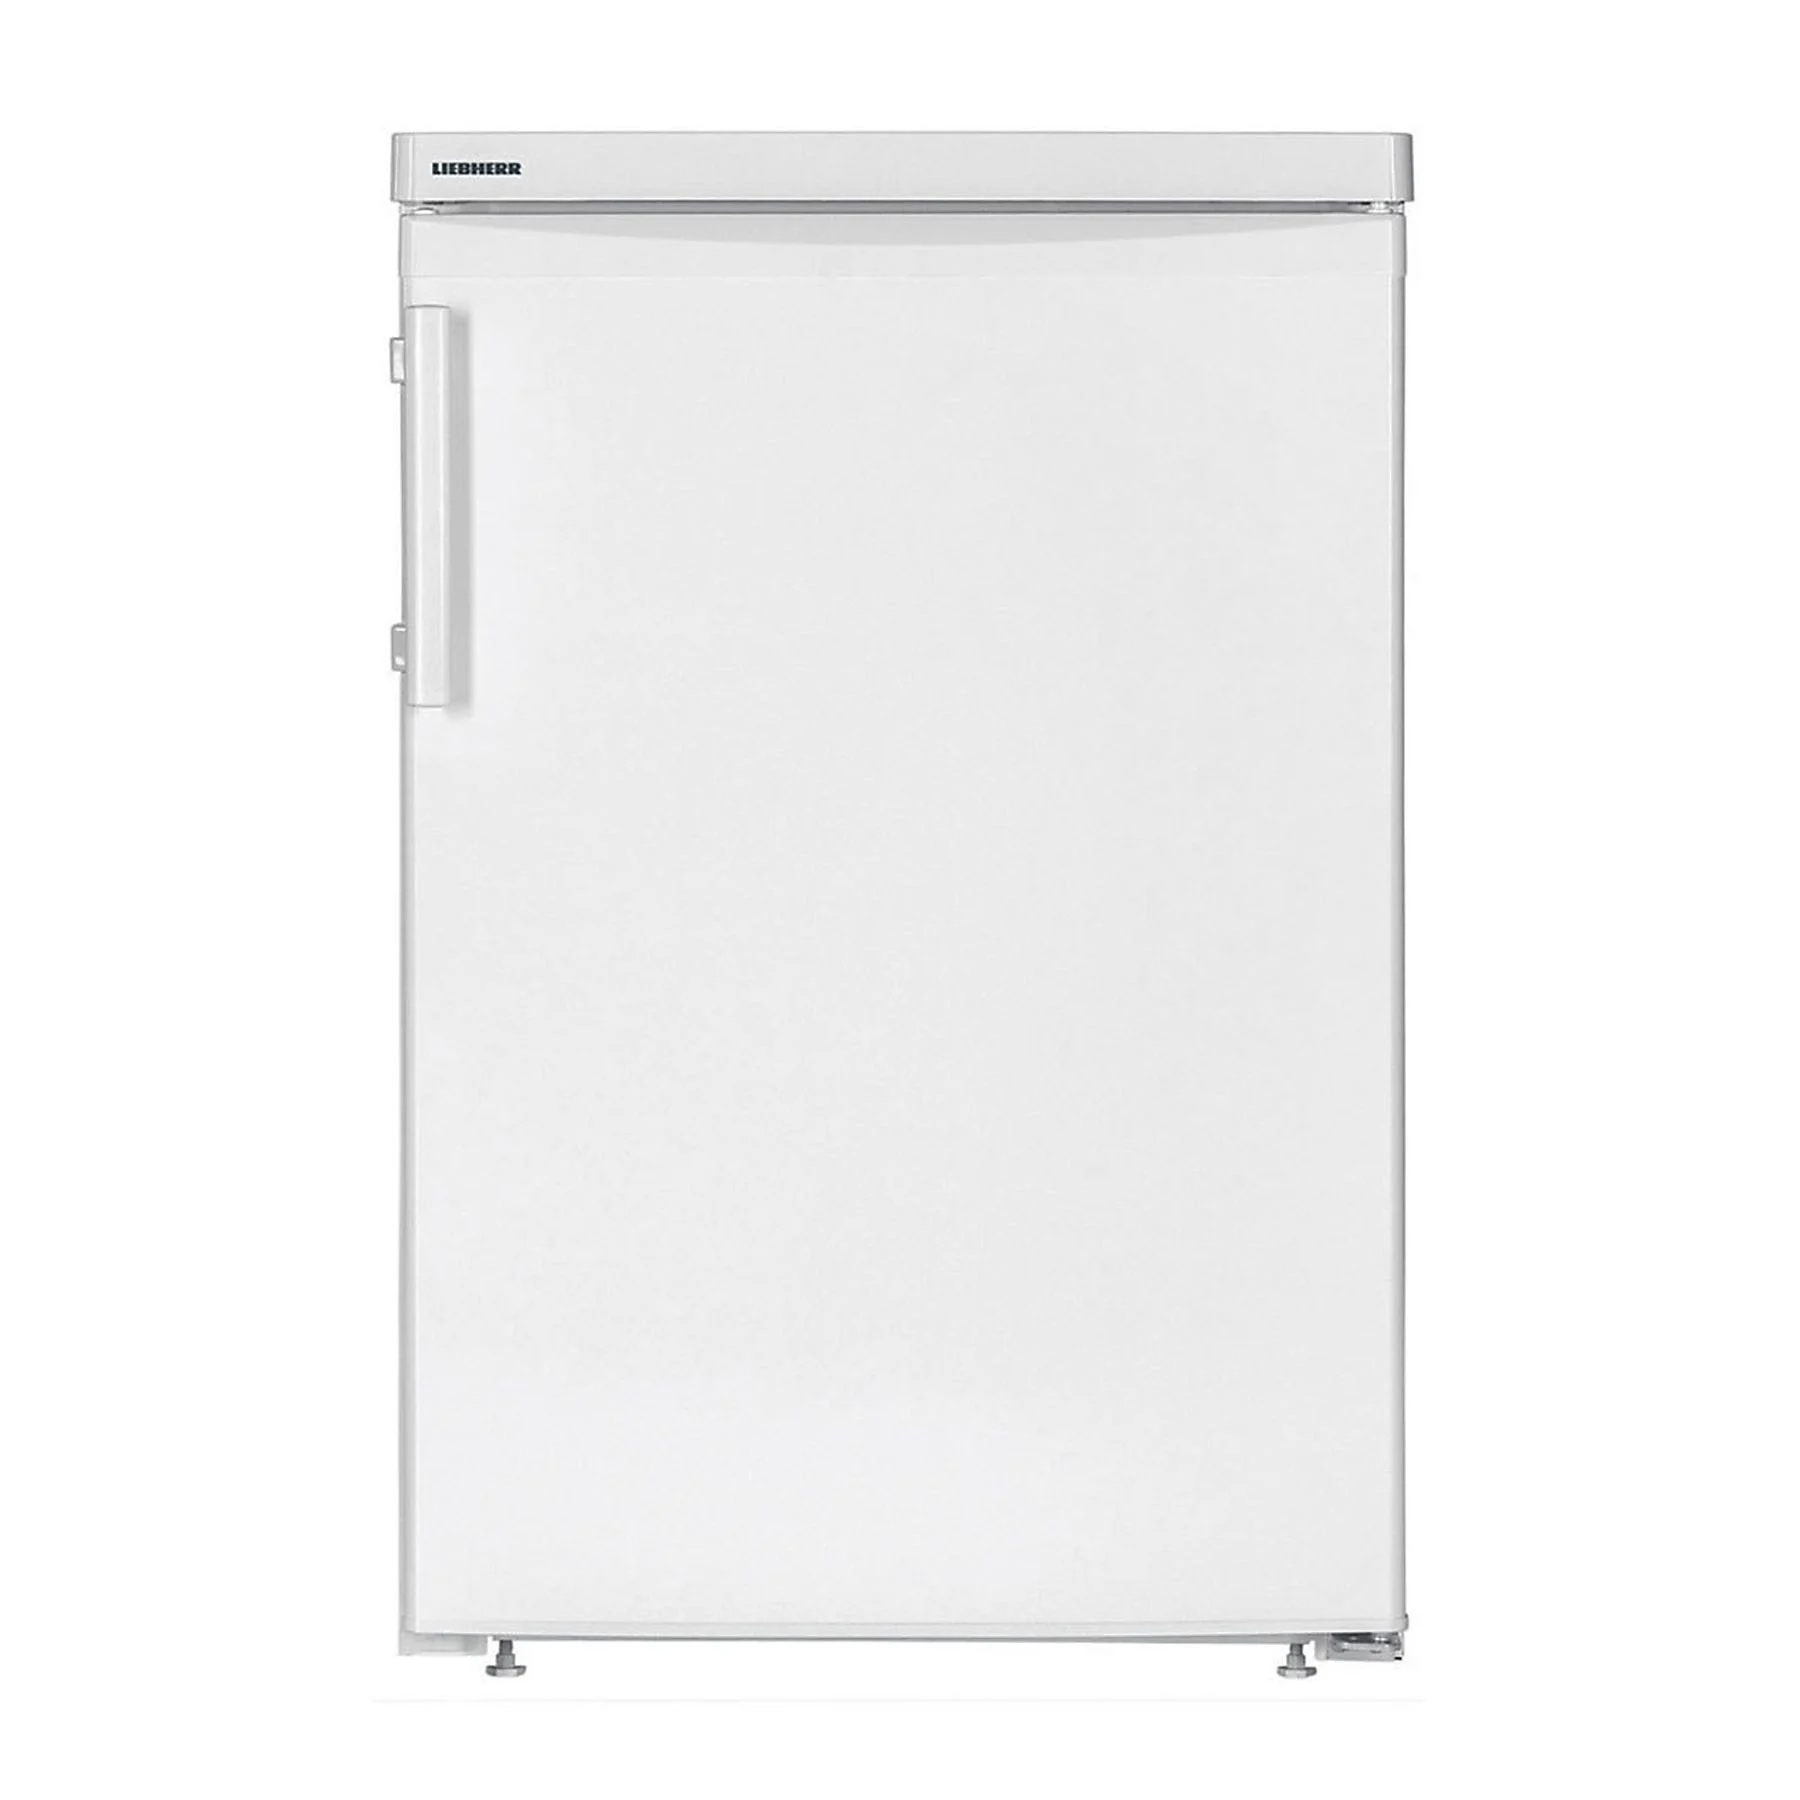 Liebherr TP 1414 55 cm table refrigerator